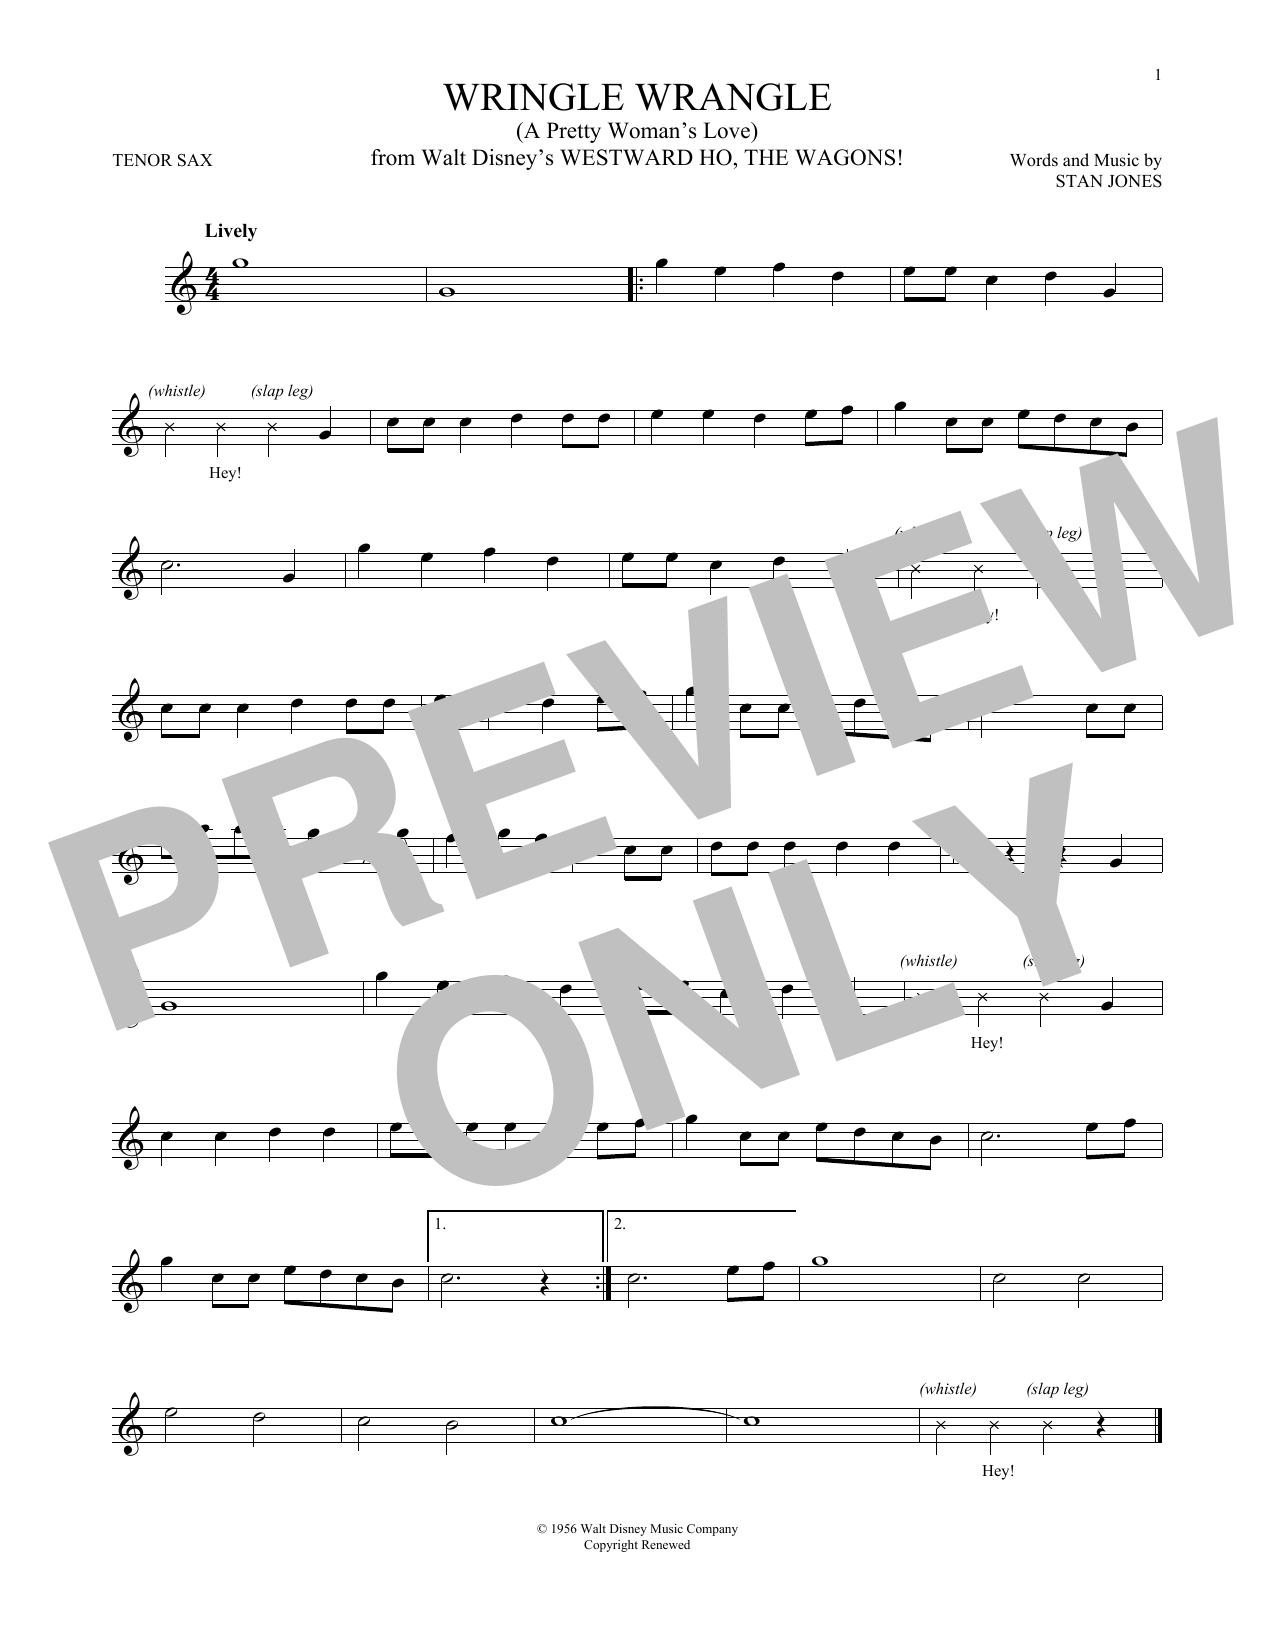 Stan Jones Wringle Wrangle (A Pretty Woman's Love) Sheet Music Notes & Chords for Tenor Saxophone - Download or Print PDF